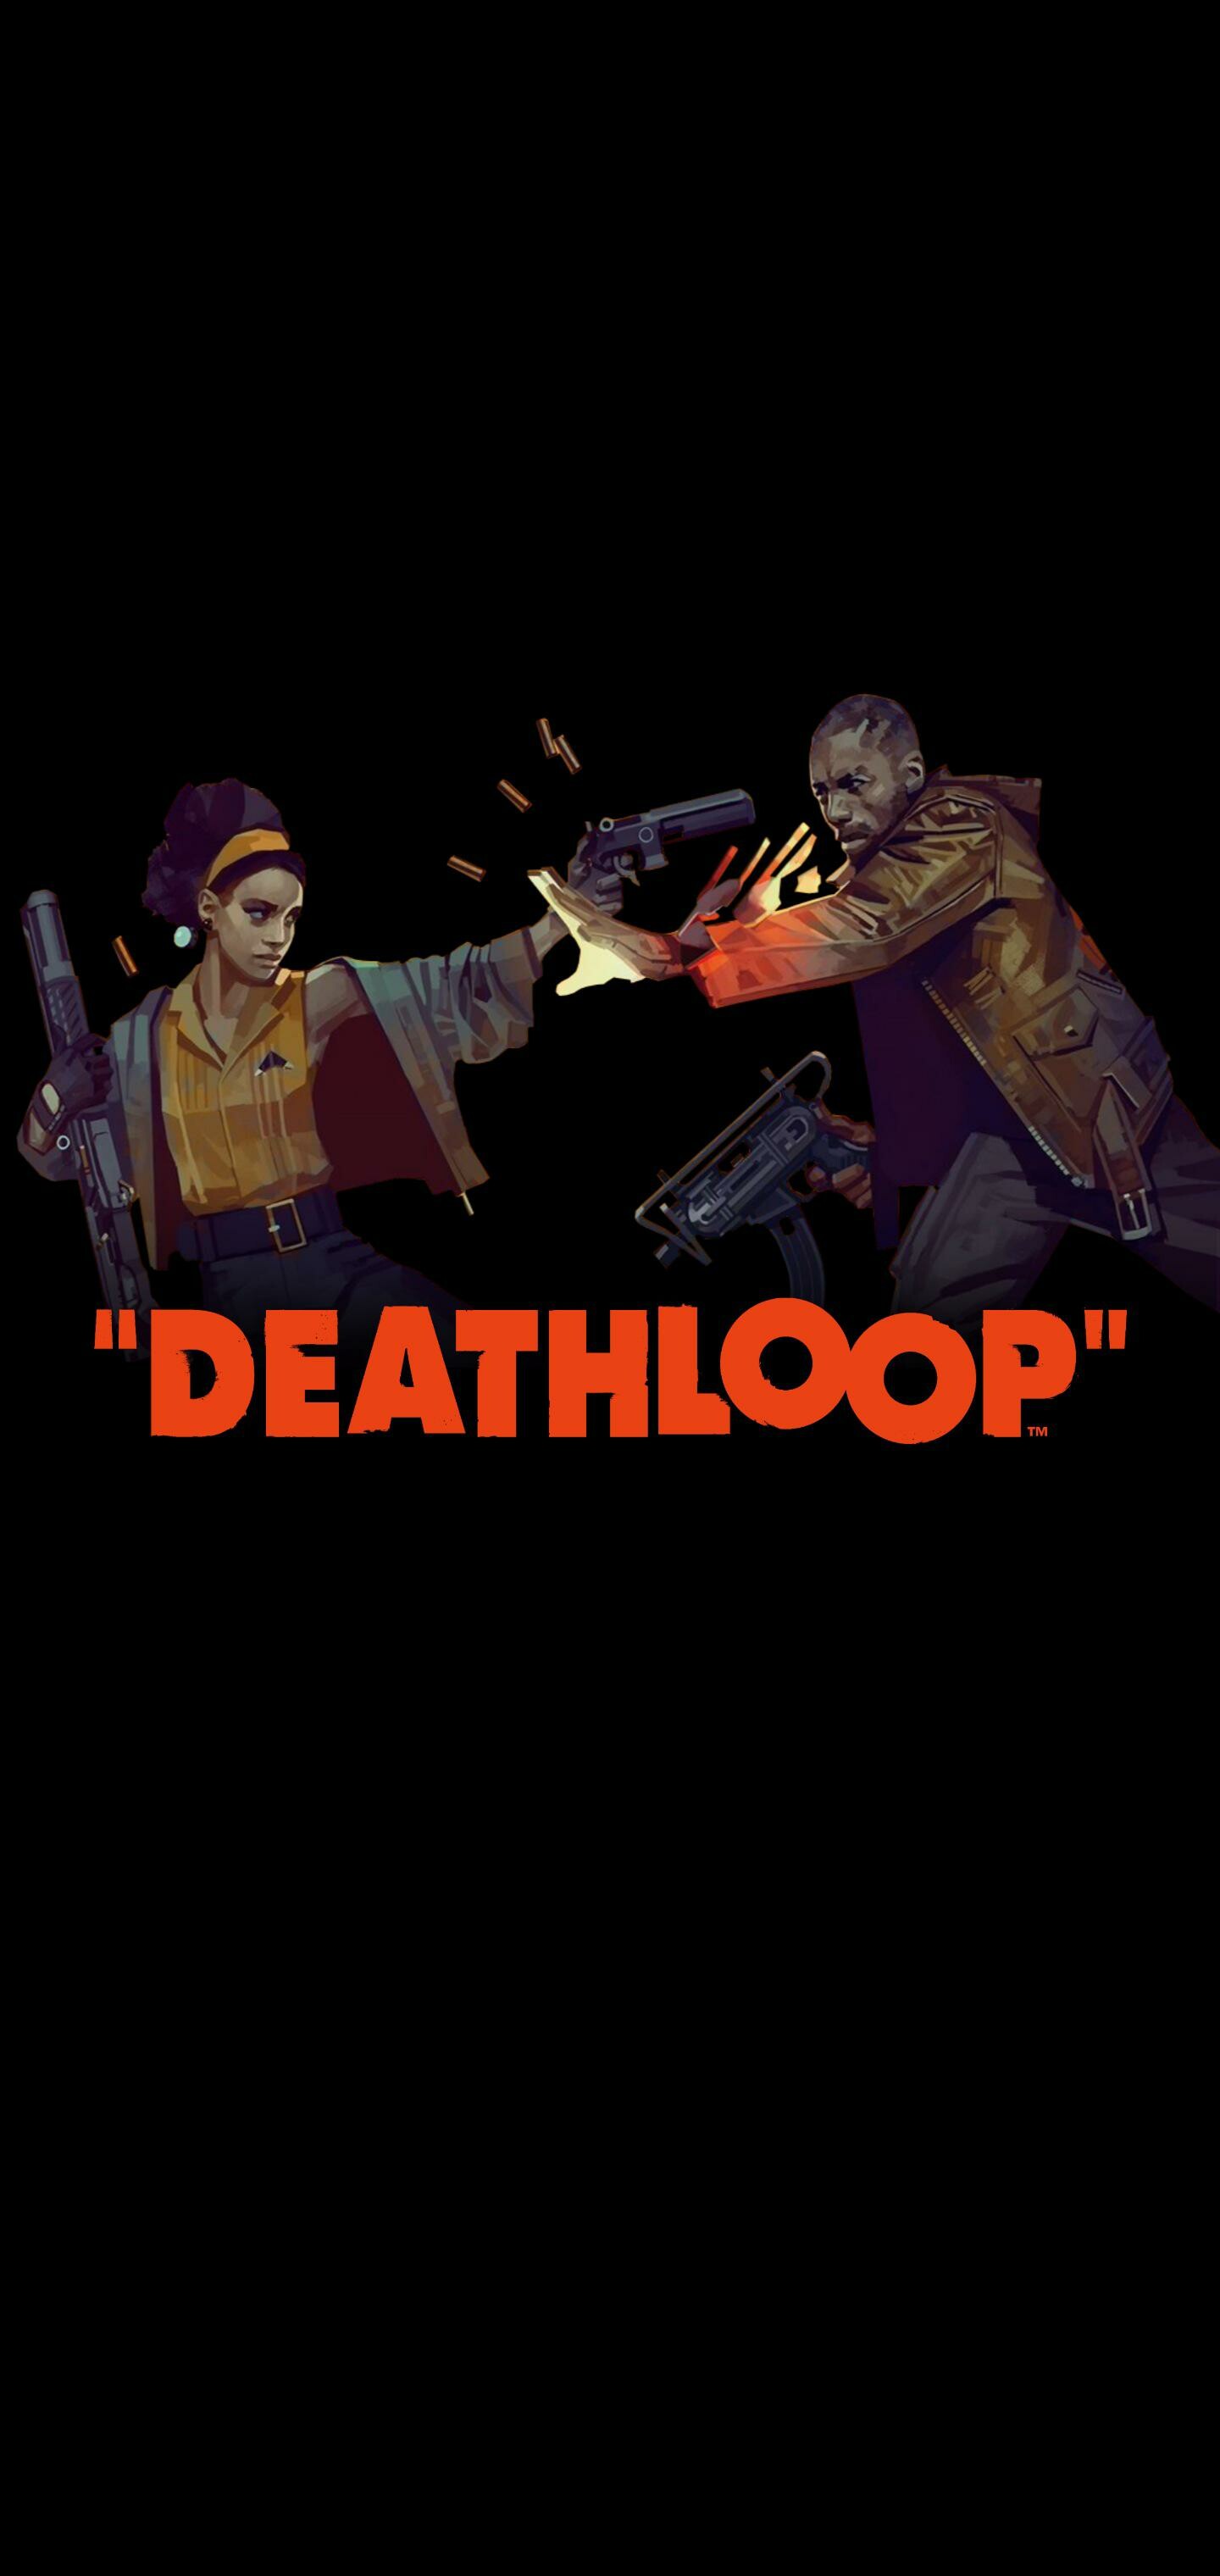 Deathloop: A next-gen first-person shooter from Arkane Lyon, the award-winning studio behind Dishonored. 1440x3040 HD Wallpaper.